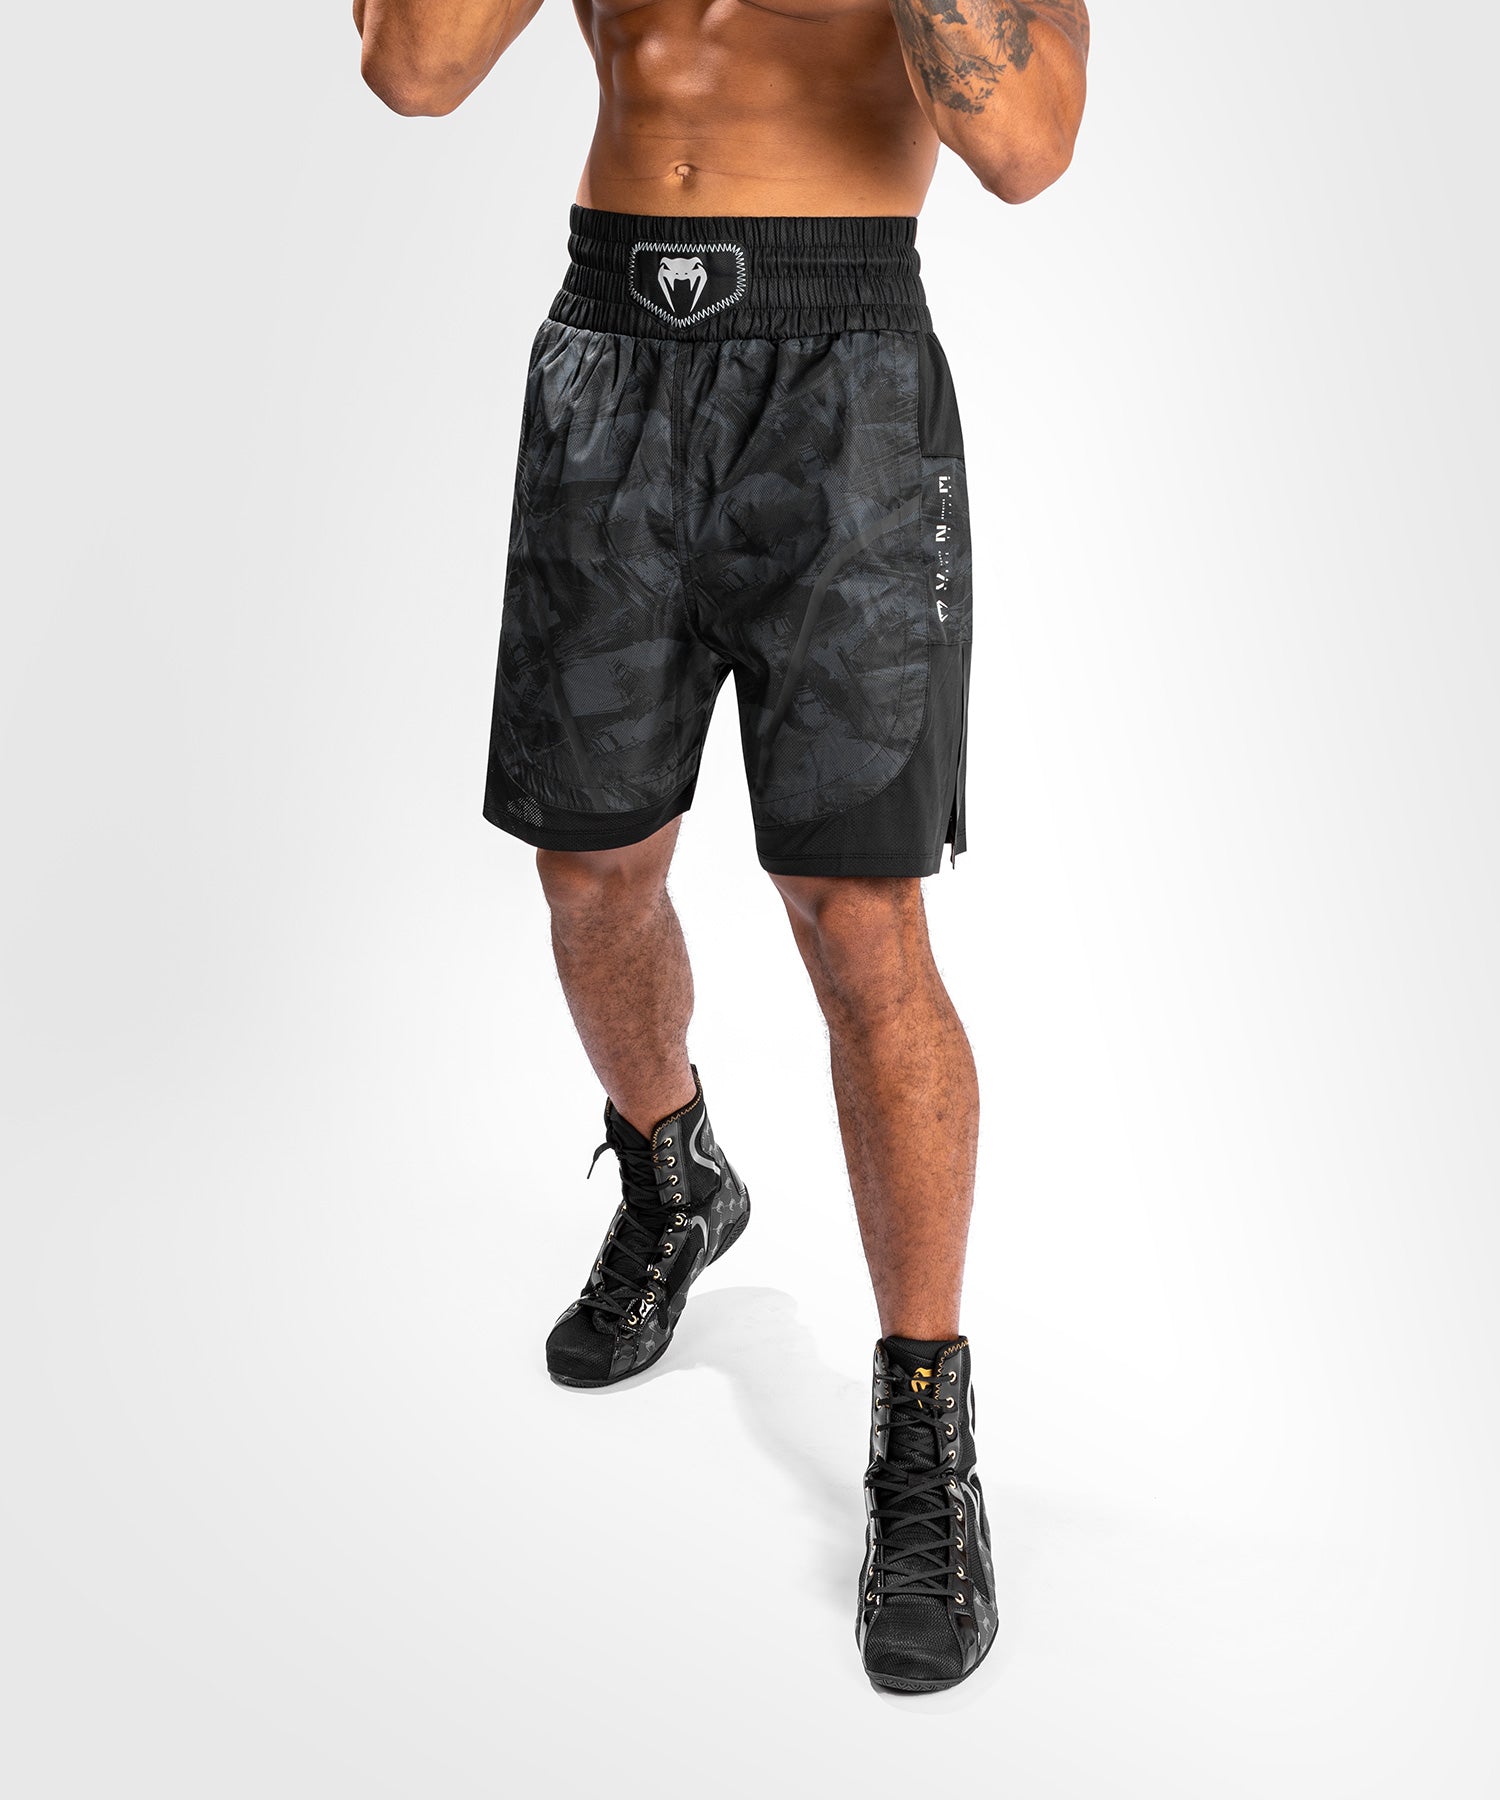 Pantalones de boxeo para hombre Shorts de boxeo